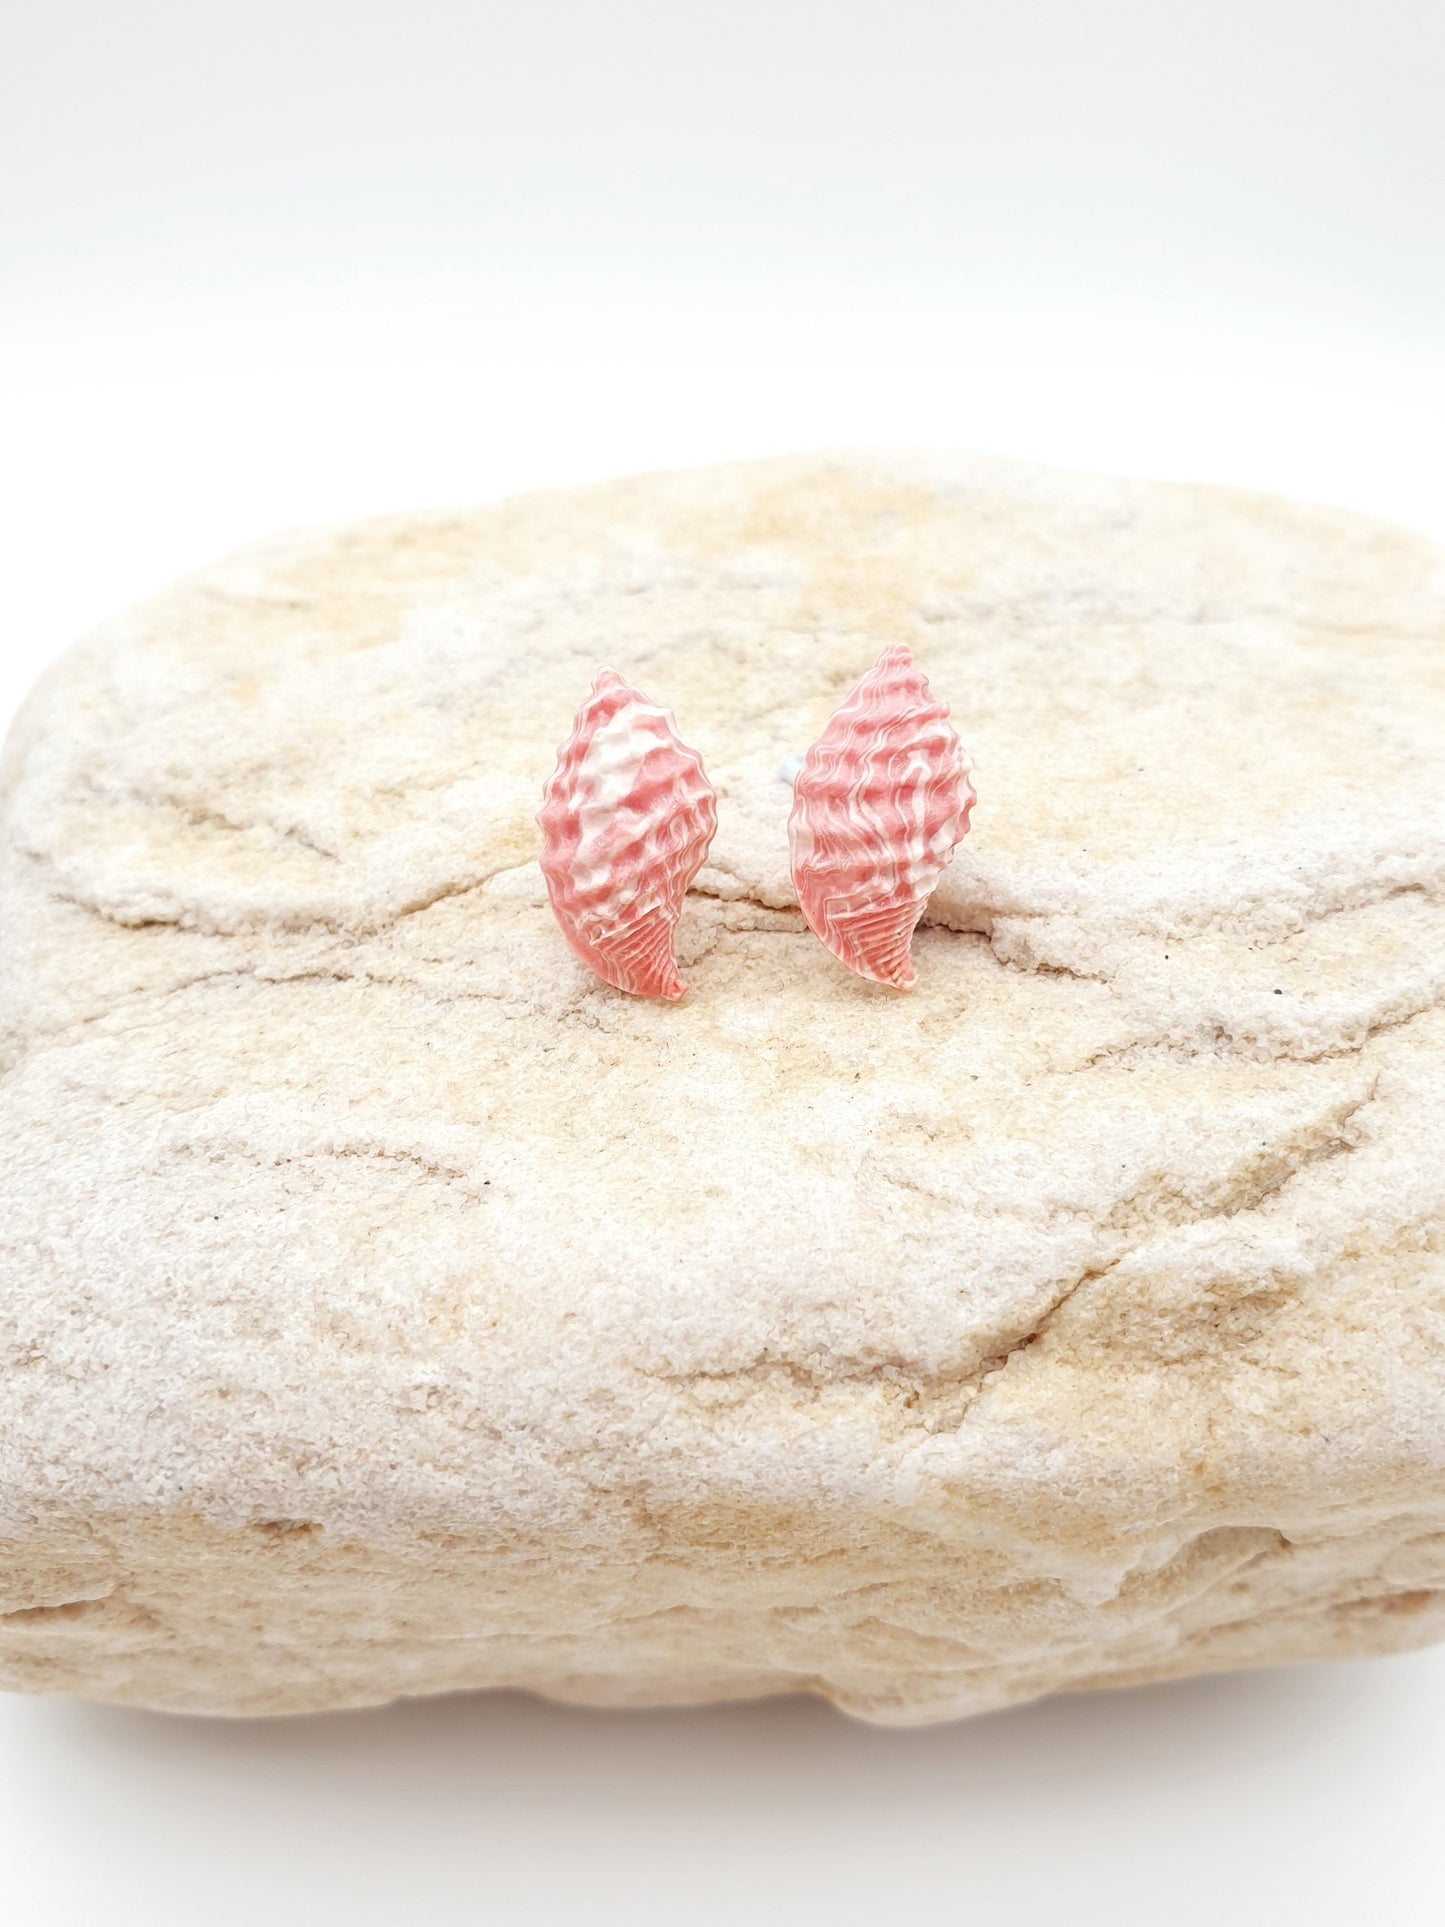 Earring studs - pink & white scotch bonnet shells